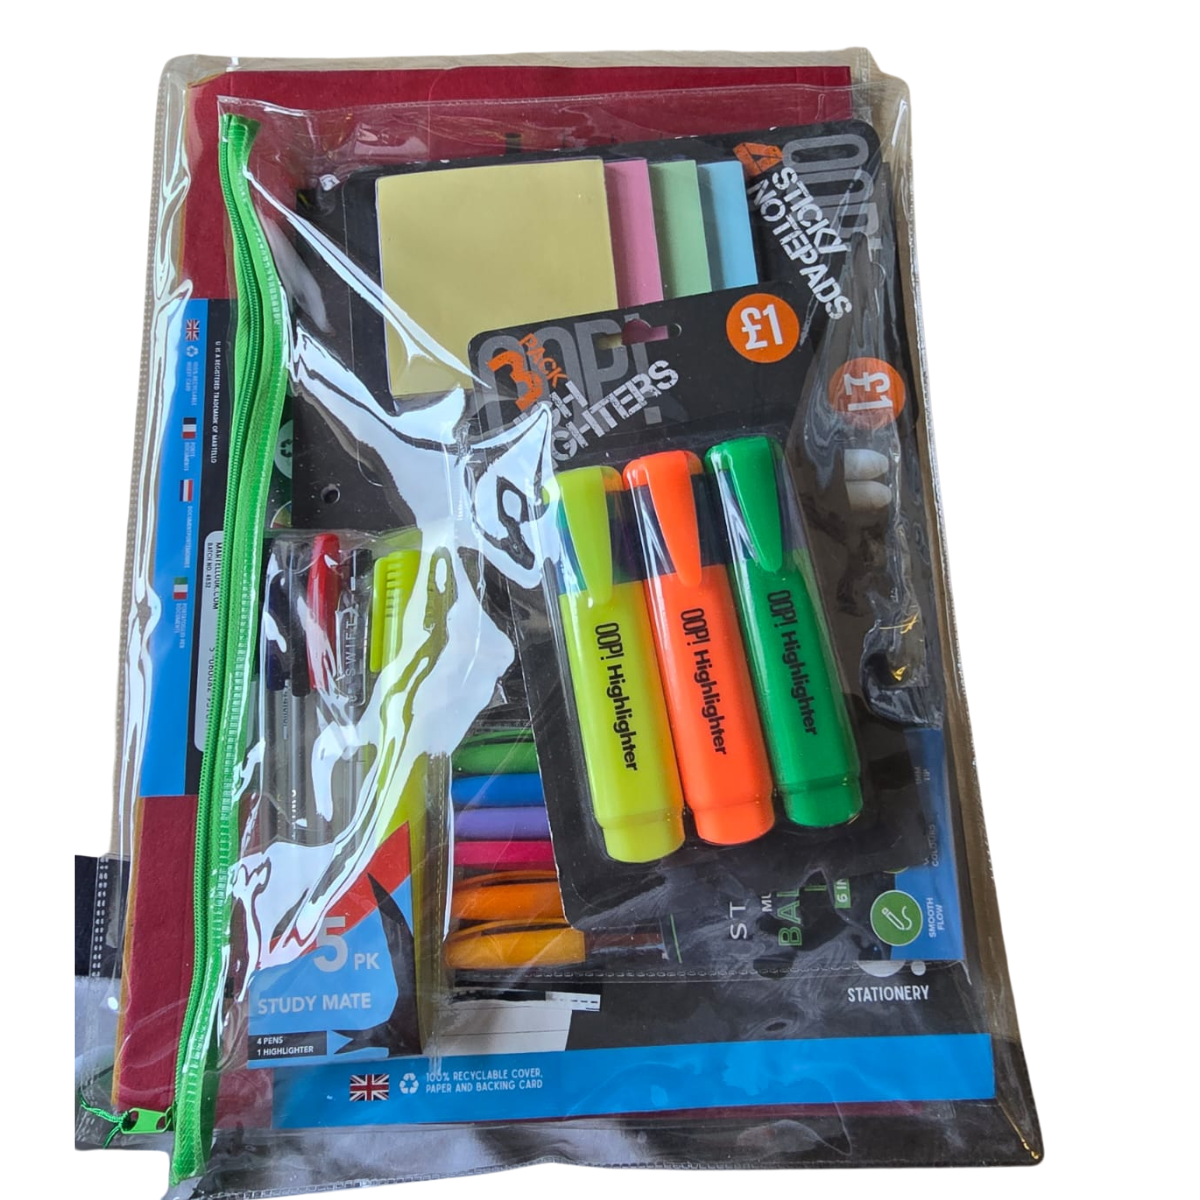 The Noor - Student Folder Bundle - 7 items plus wallet